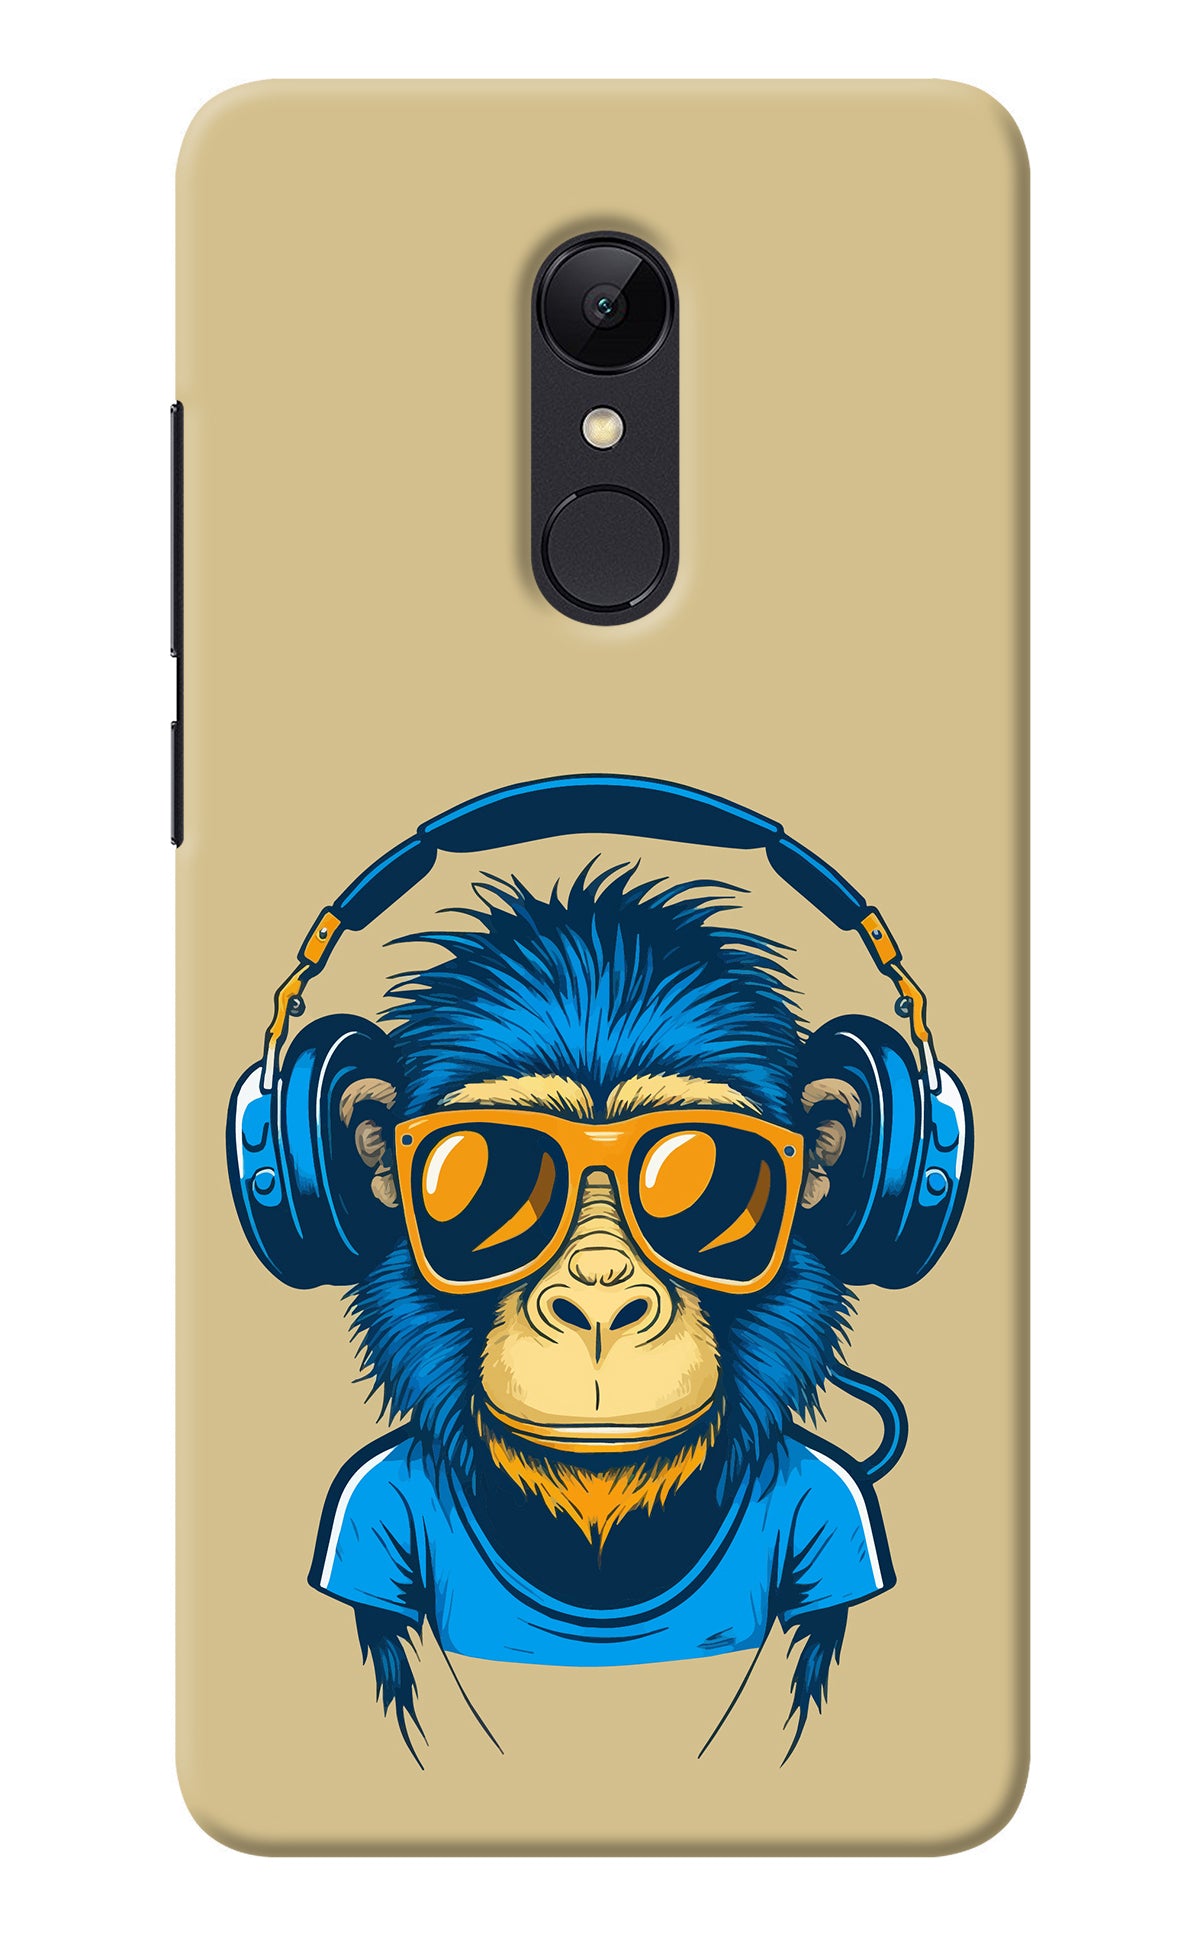 Monkey Headphone Redmi Note 4 Back Cover